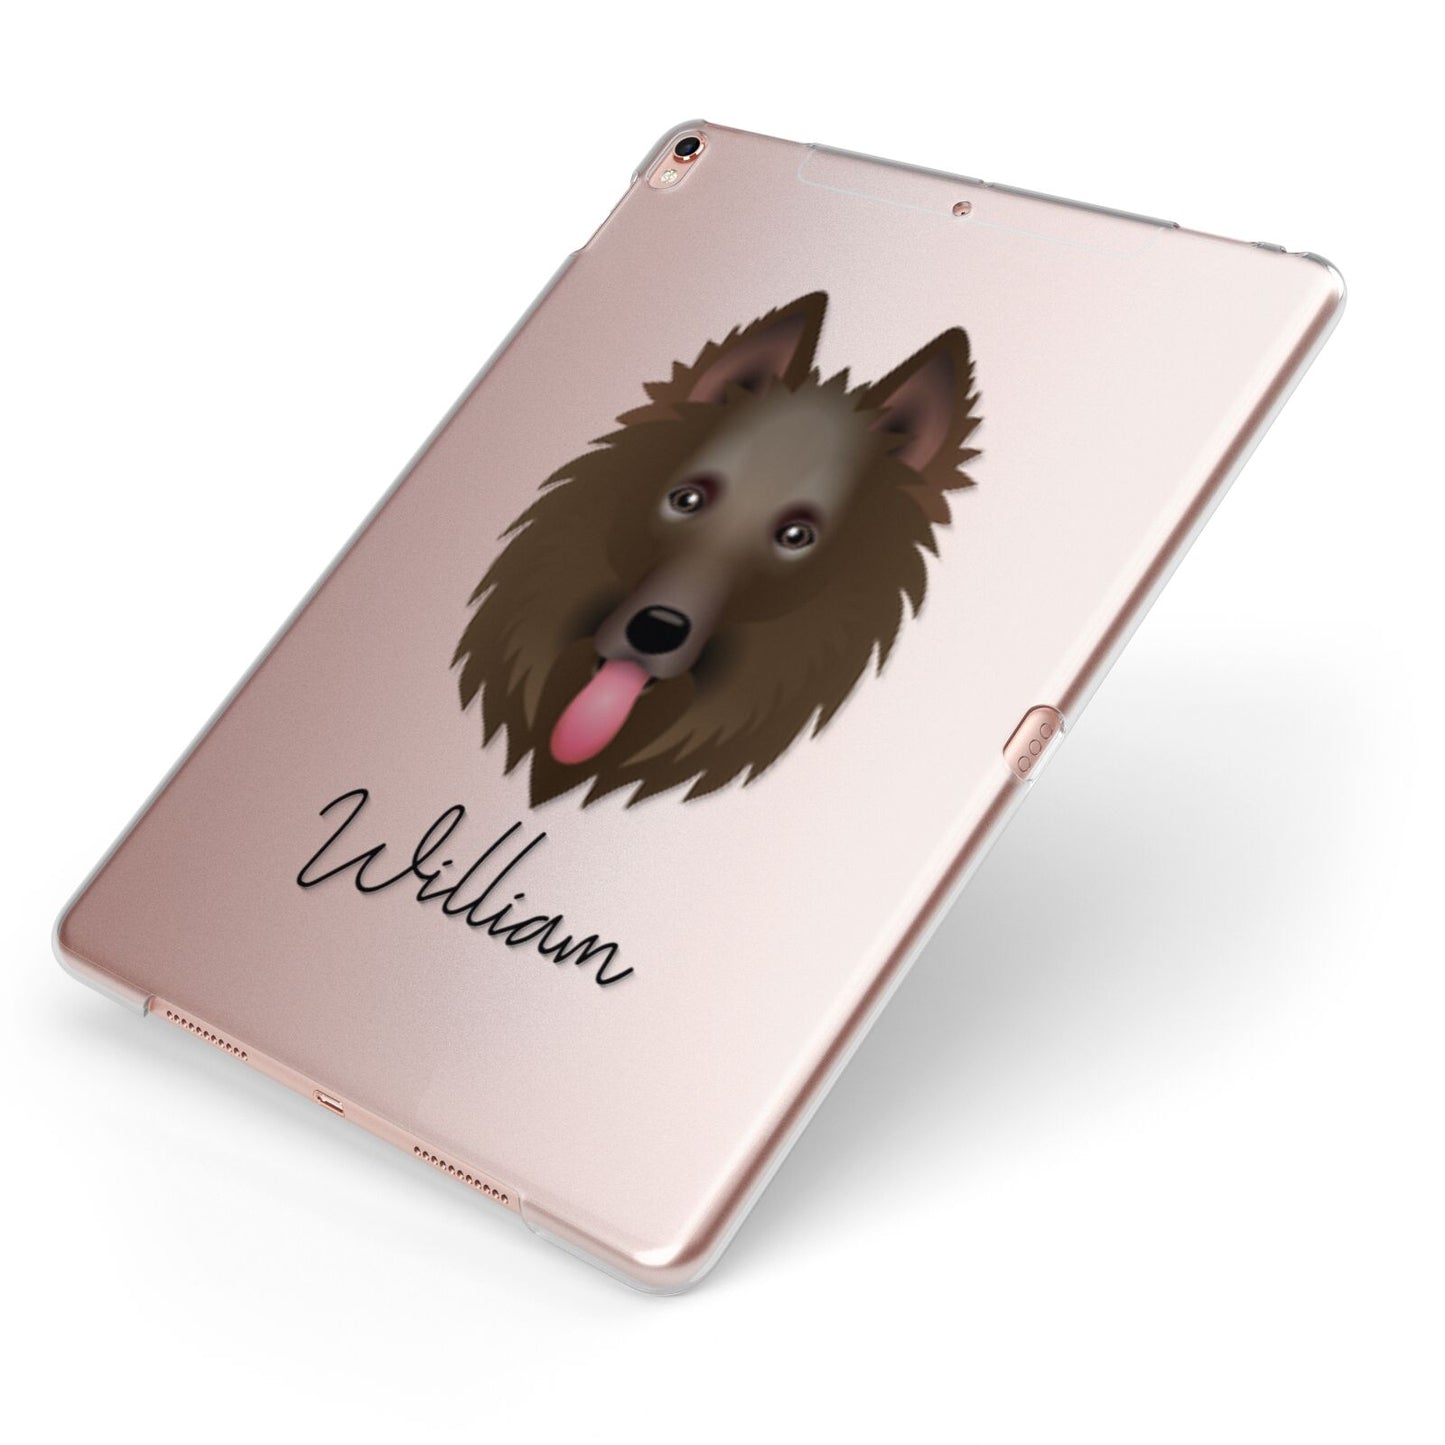 Belgian Shepherd Personalised Apple iPad Case on Rose Gold iPad Side View